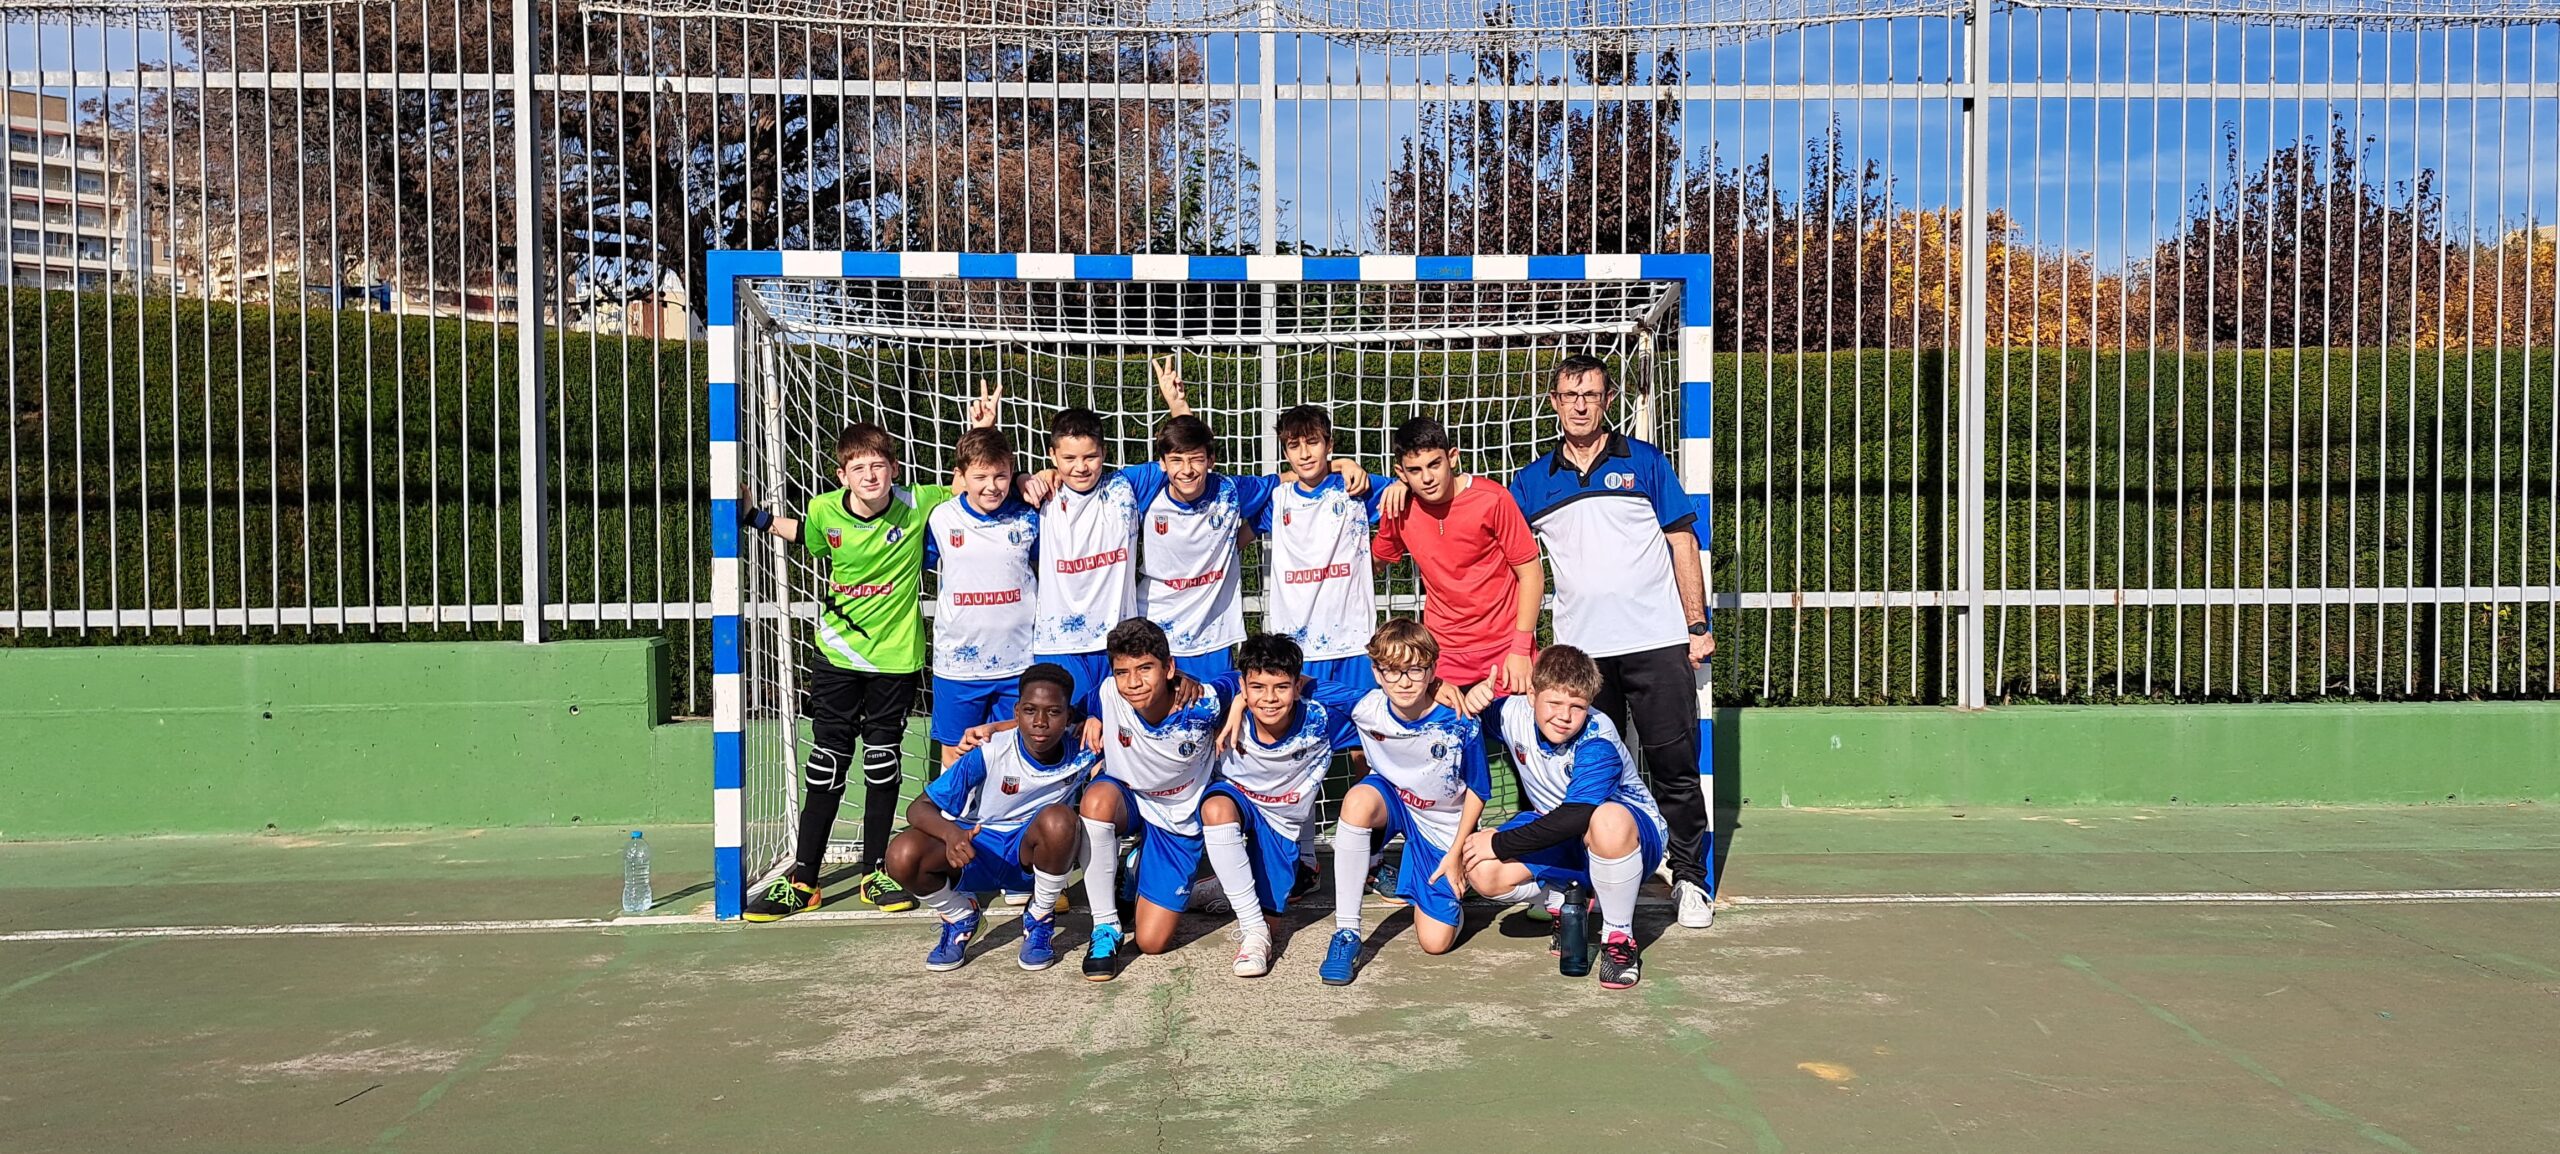 InterSala 10 Zaragoza (Infantil Masculino) 8-1 La Almozara ‘B’ – Jornada 4